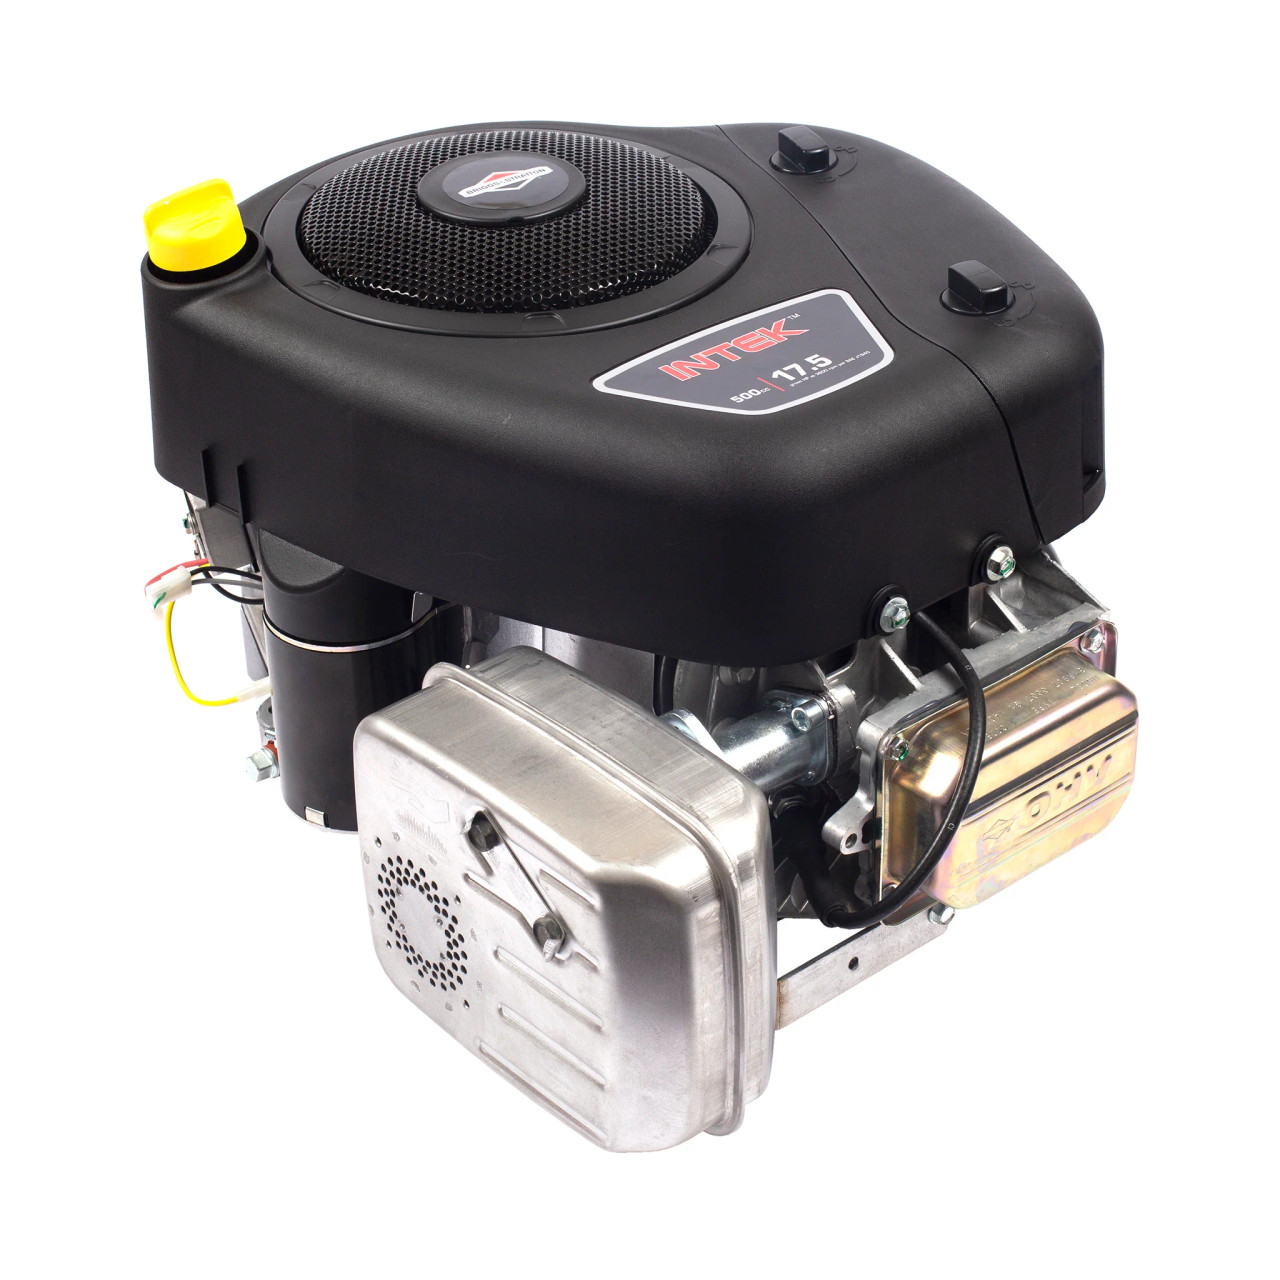 EXi Series 17.5 HP 500cc Vertical Shaft Engine 31R907-0007-G1